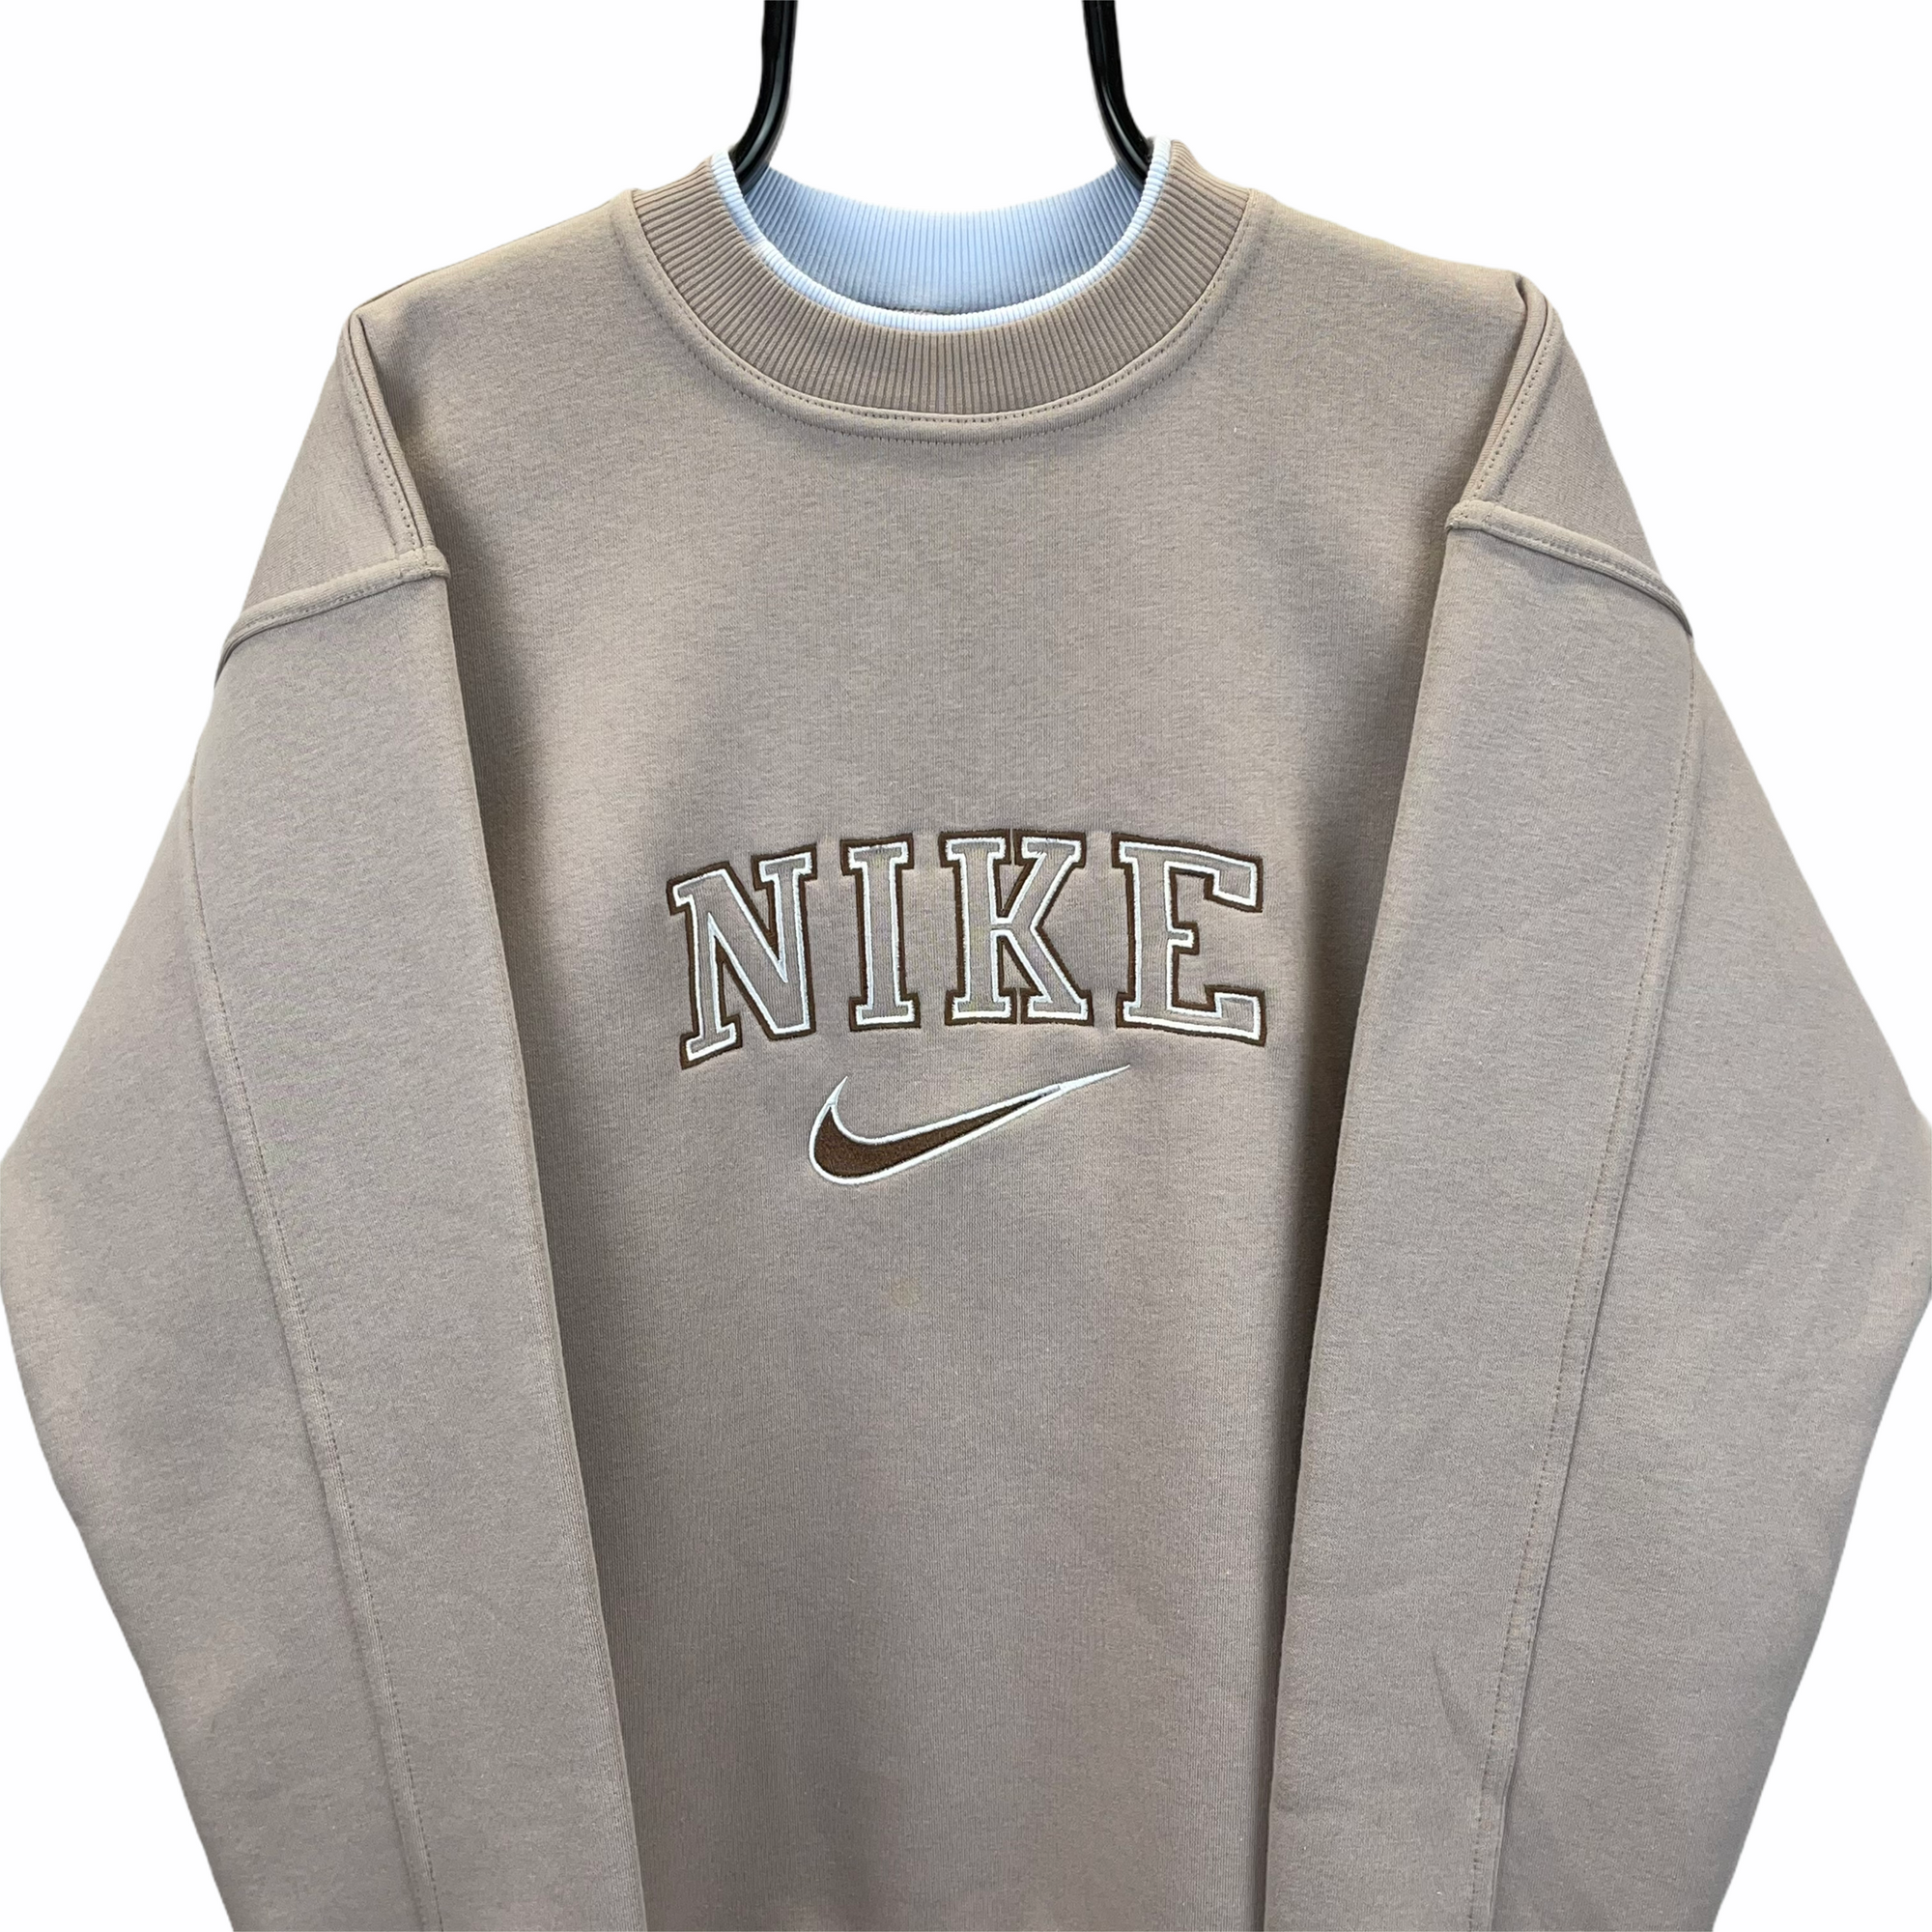 Nike Spellout Sweatshirt in Light Brown - Men's Medium/Women's Large